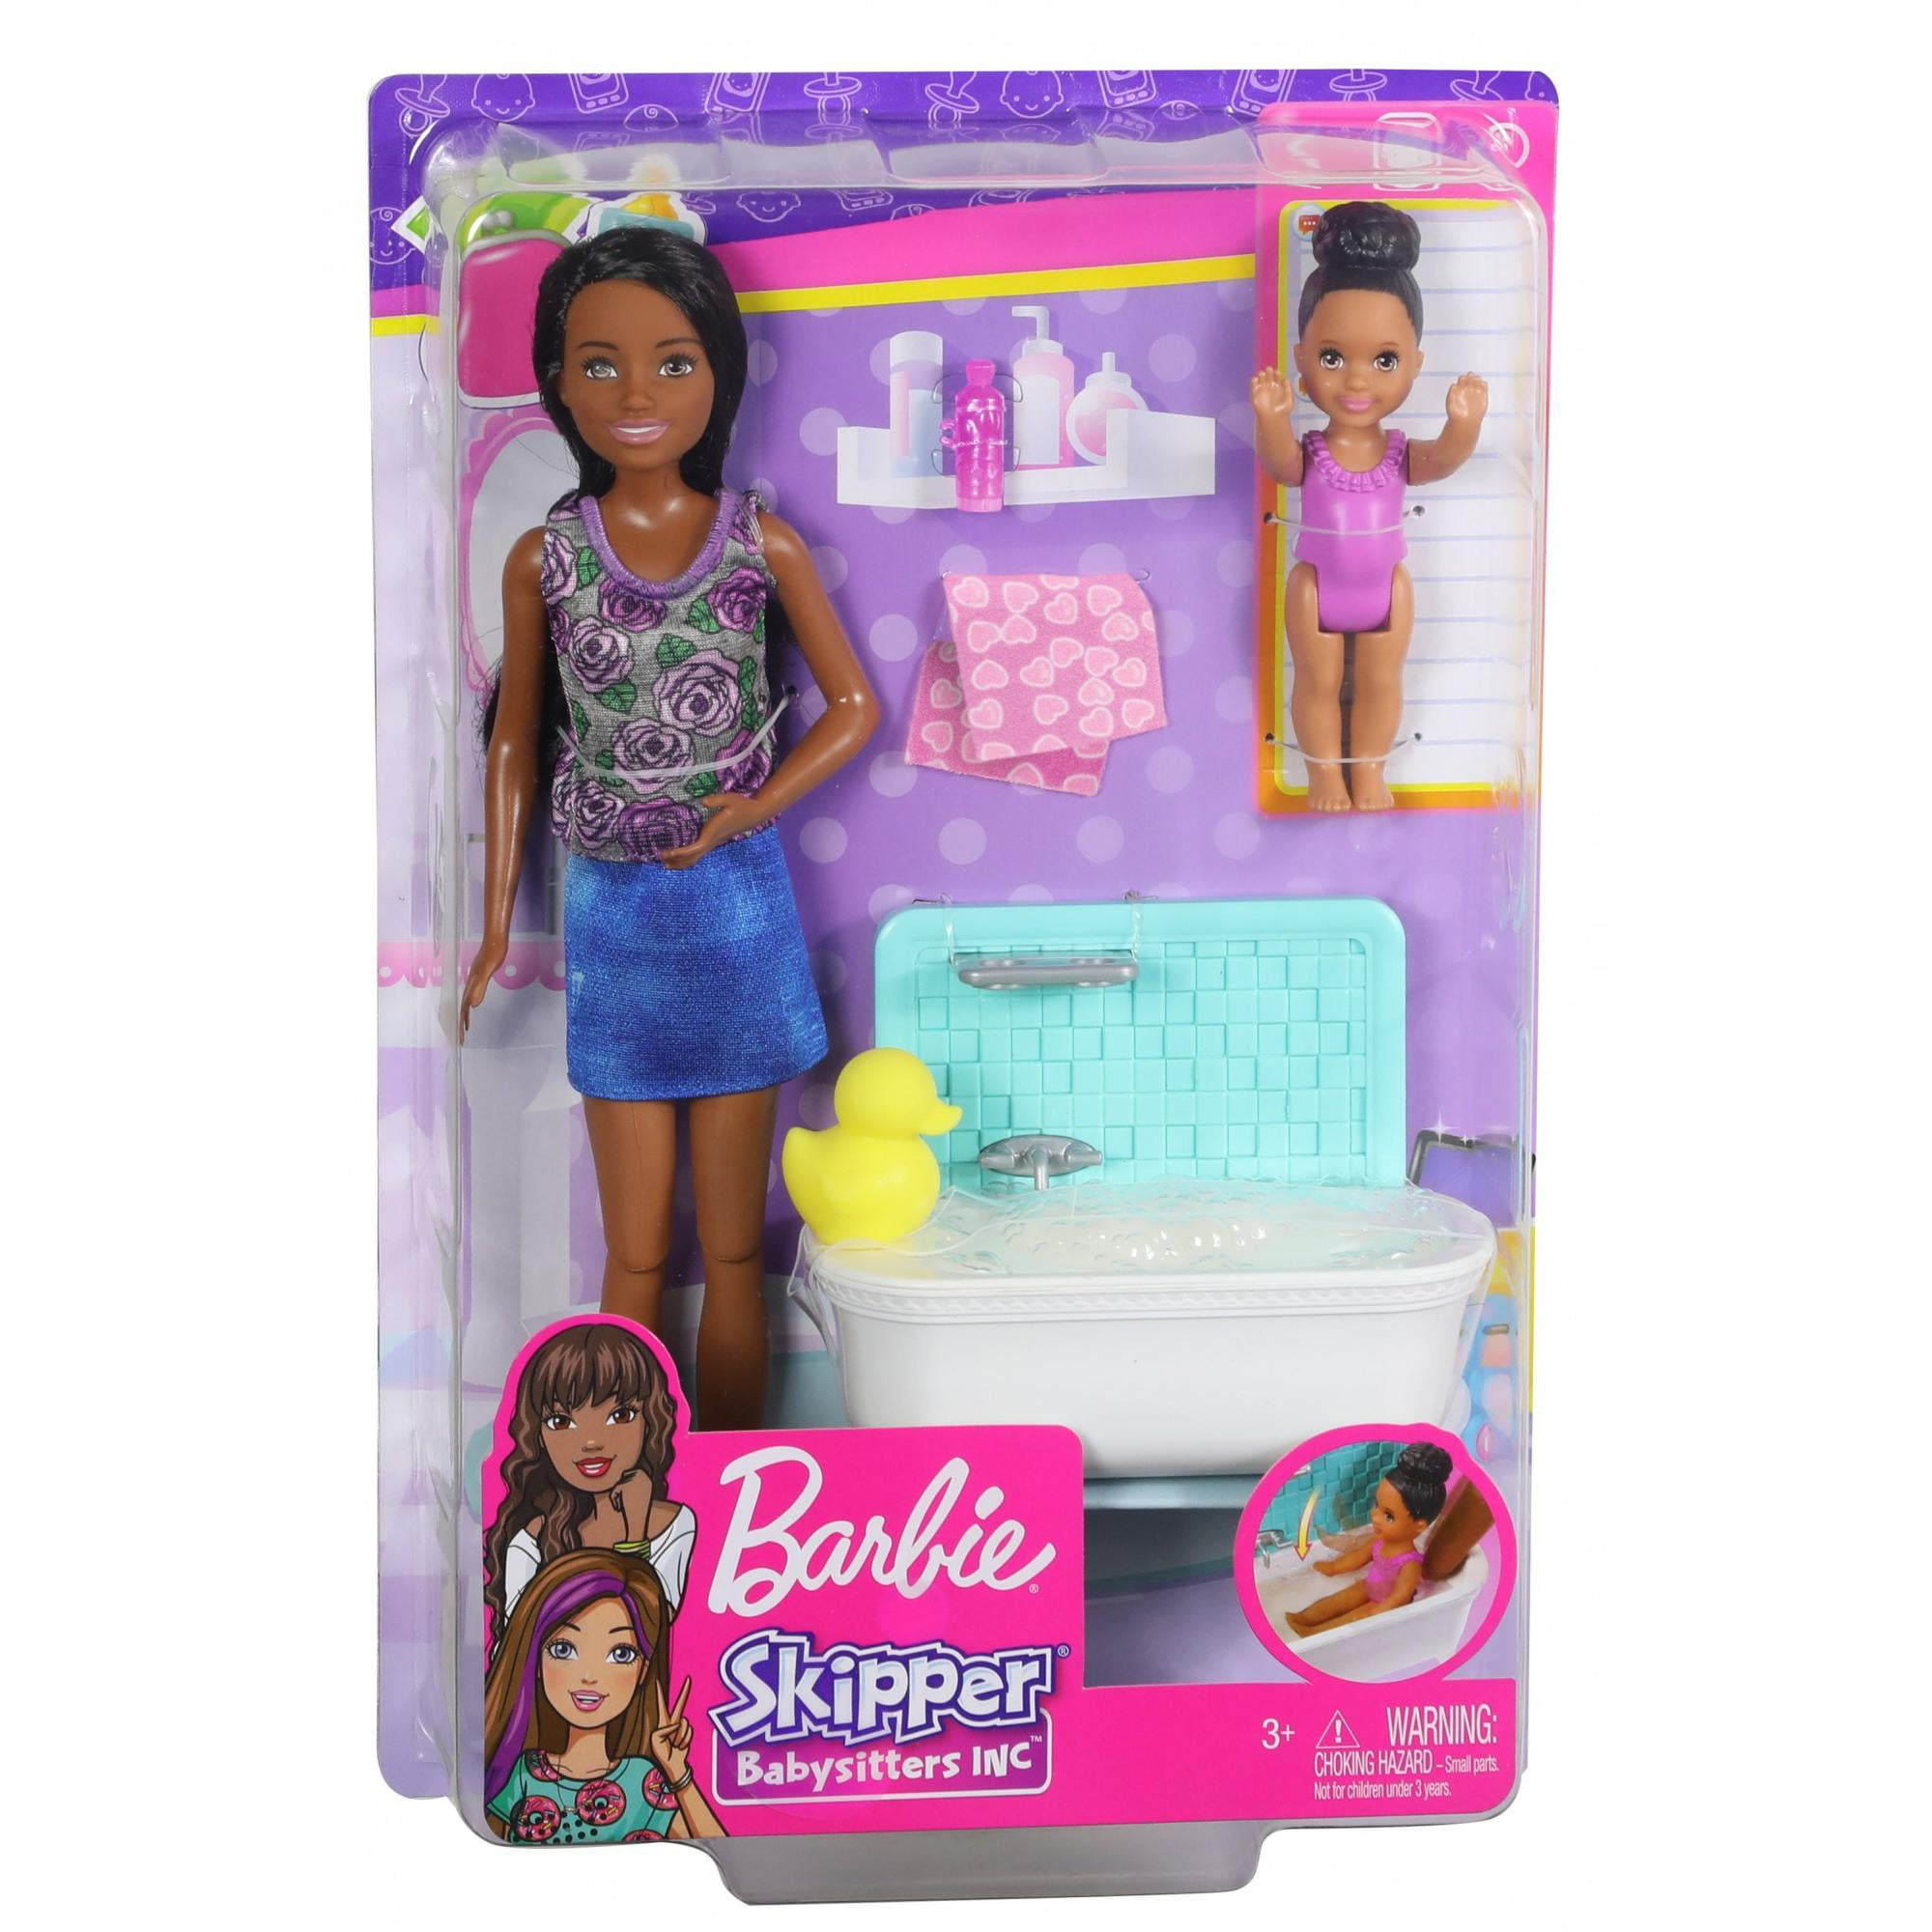 Barbie "SKIPPER baby-sitters INC." Bathtime Playset 3 Ans 